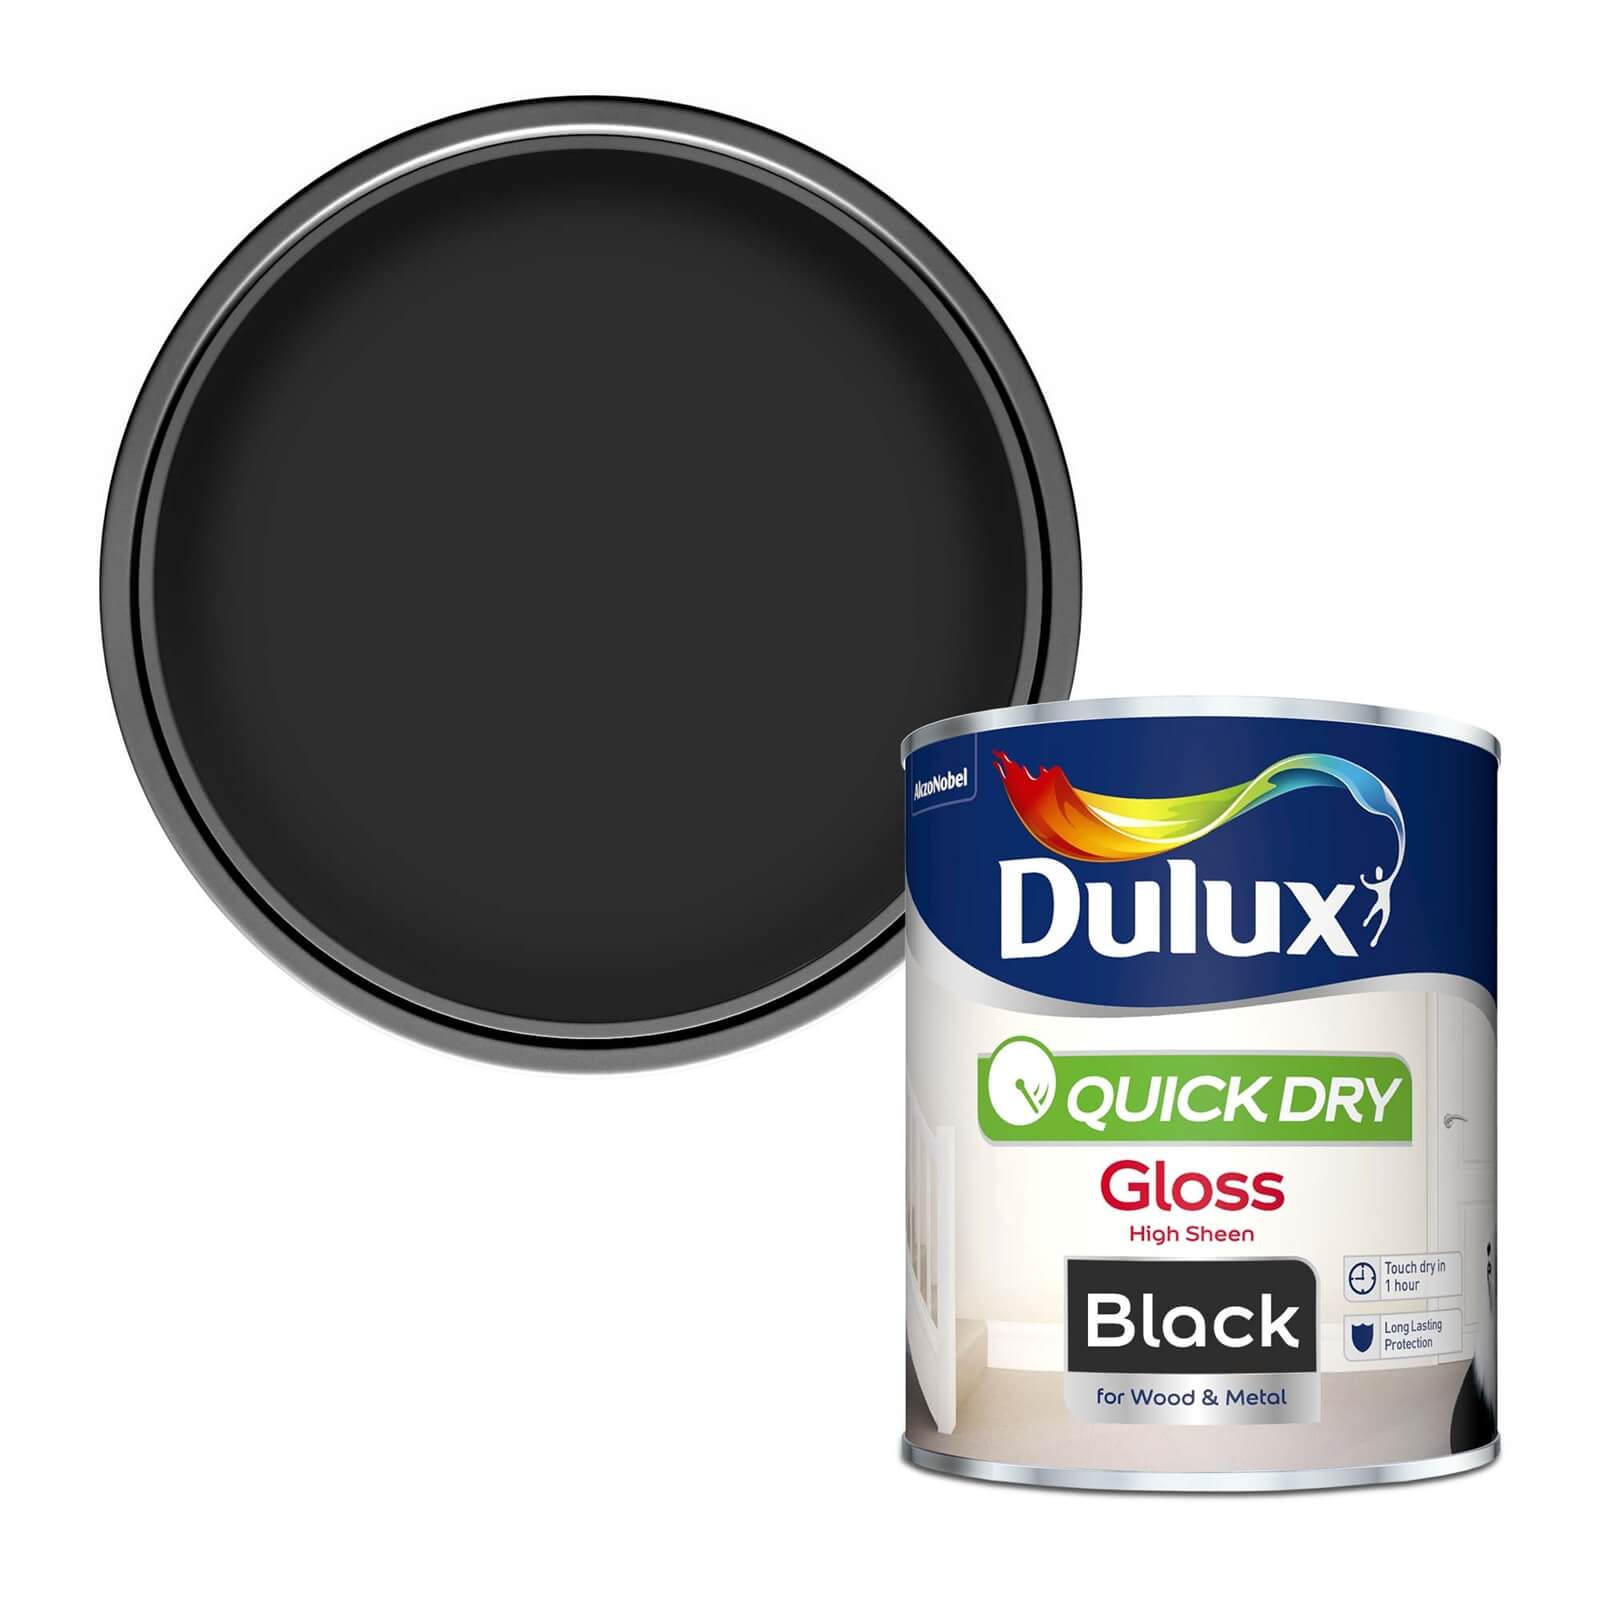 Photo of Dulux Quick Dry Gloss Paint - Black - 750ml